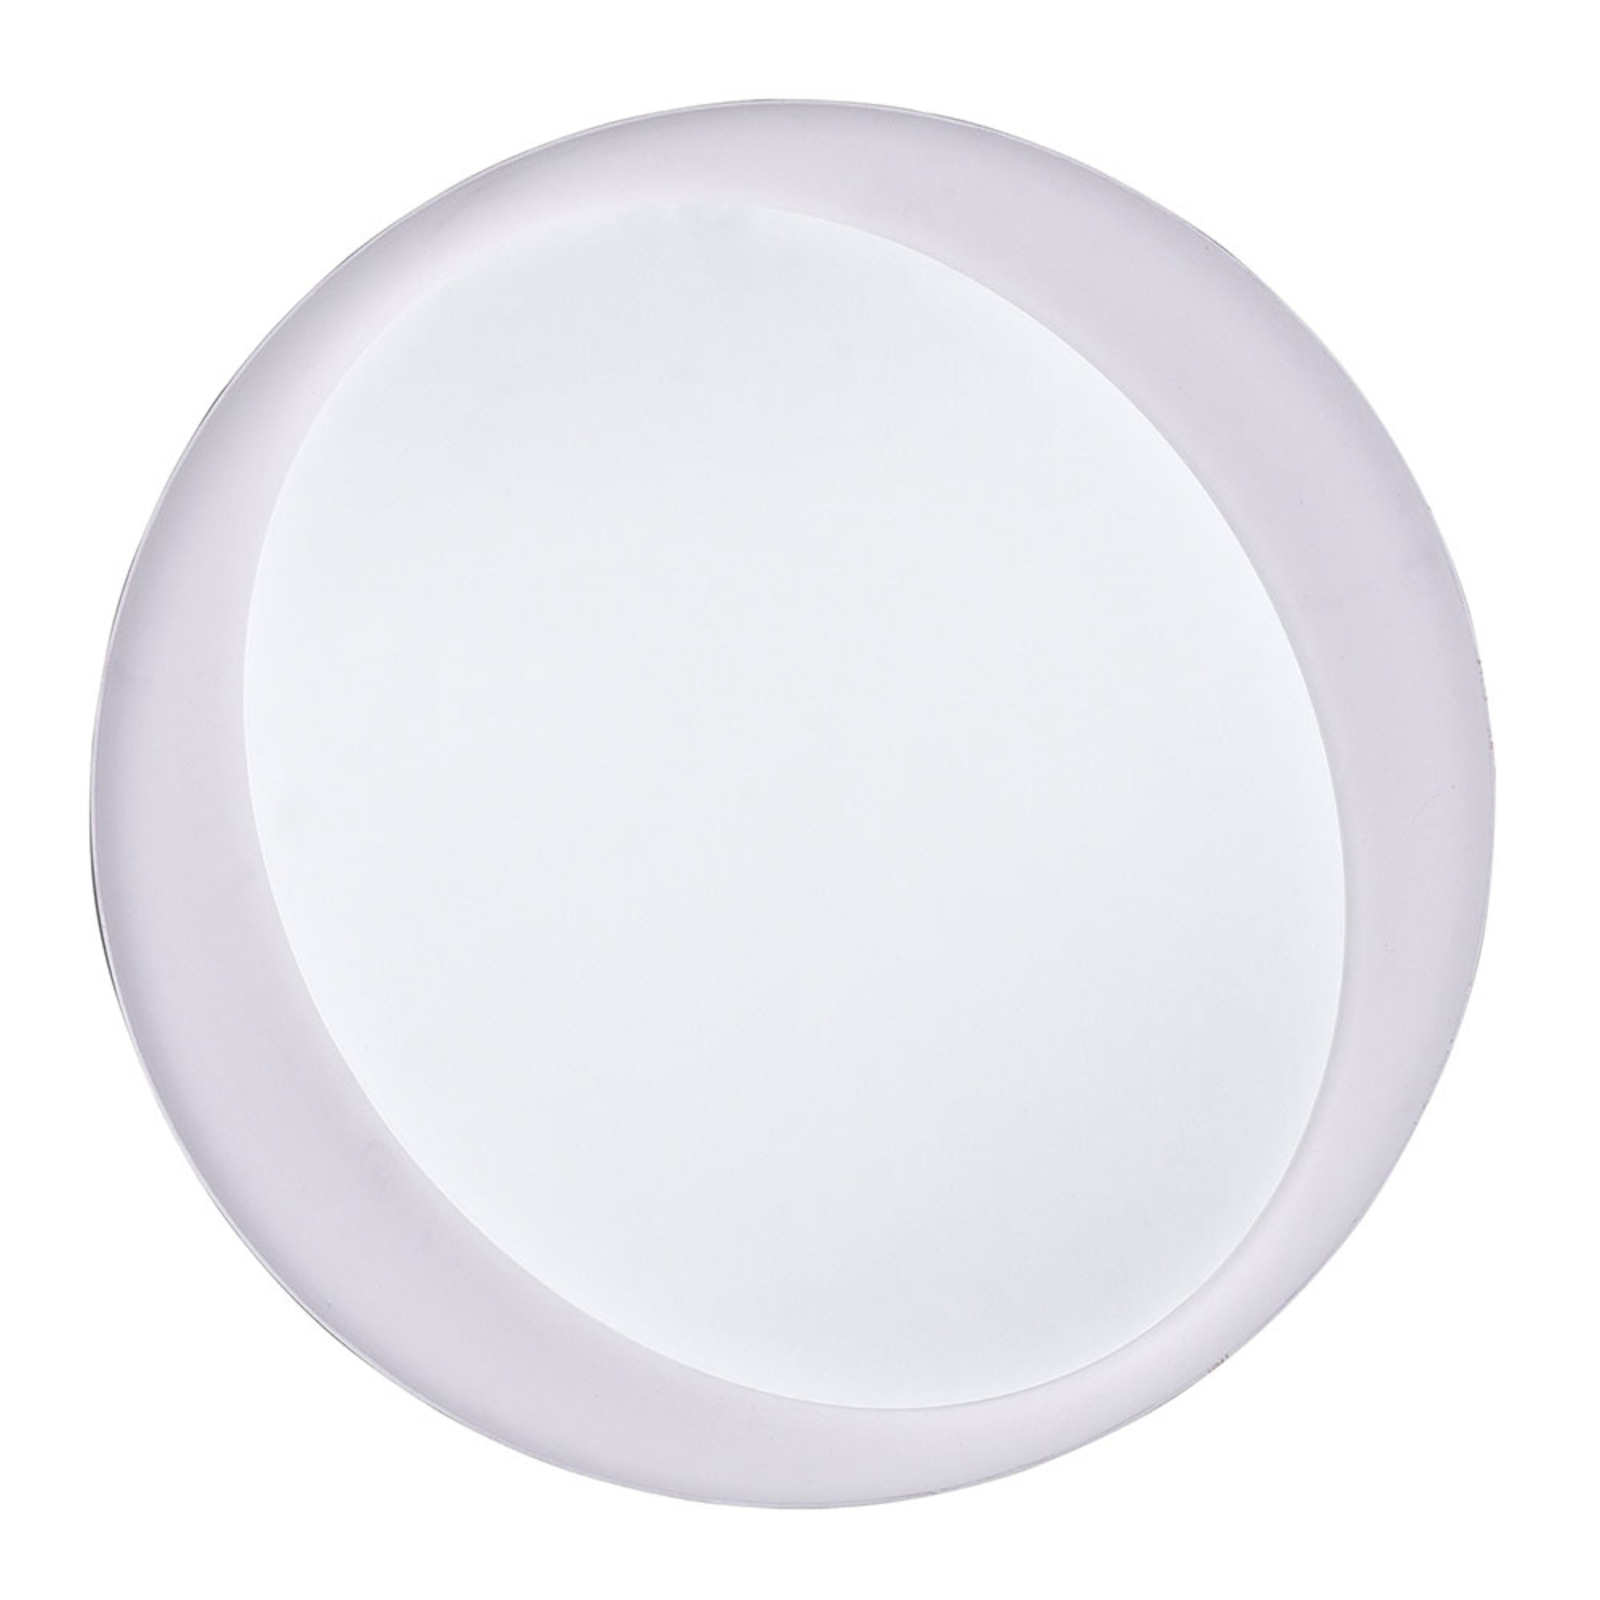 Plafoniera LED Zeta tunable white, grigio/bianco